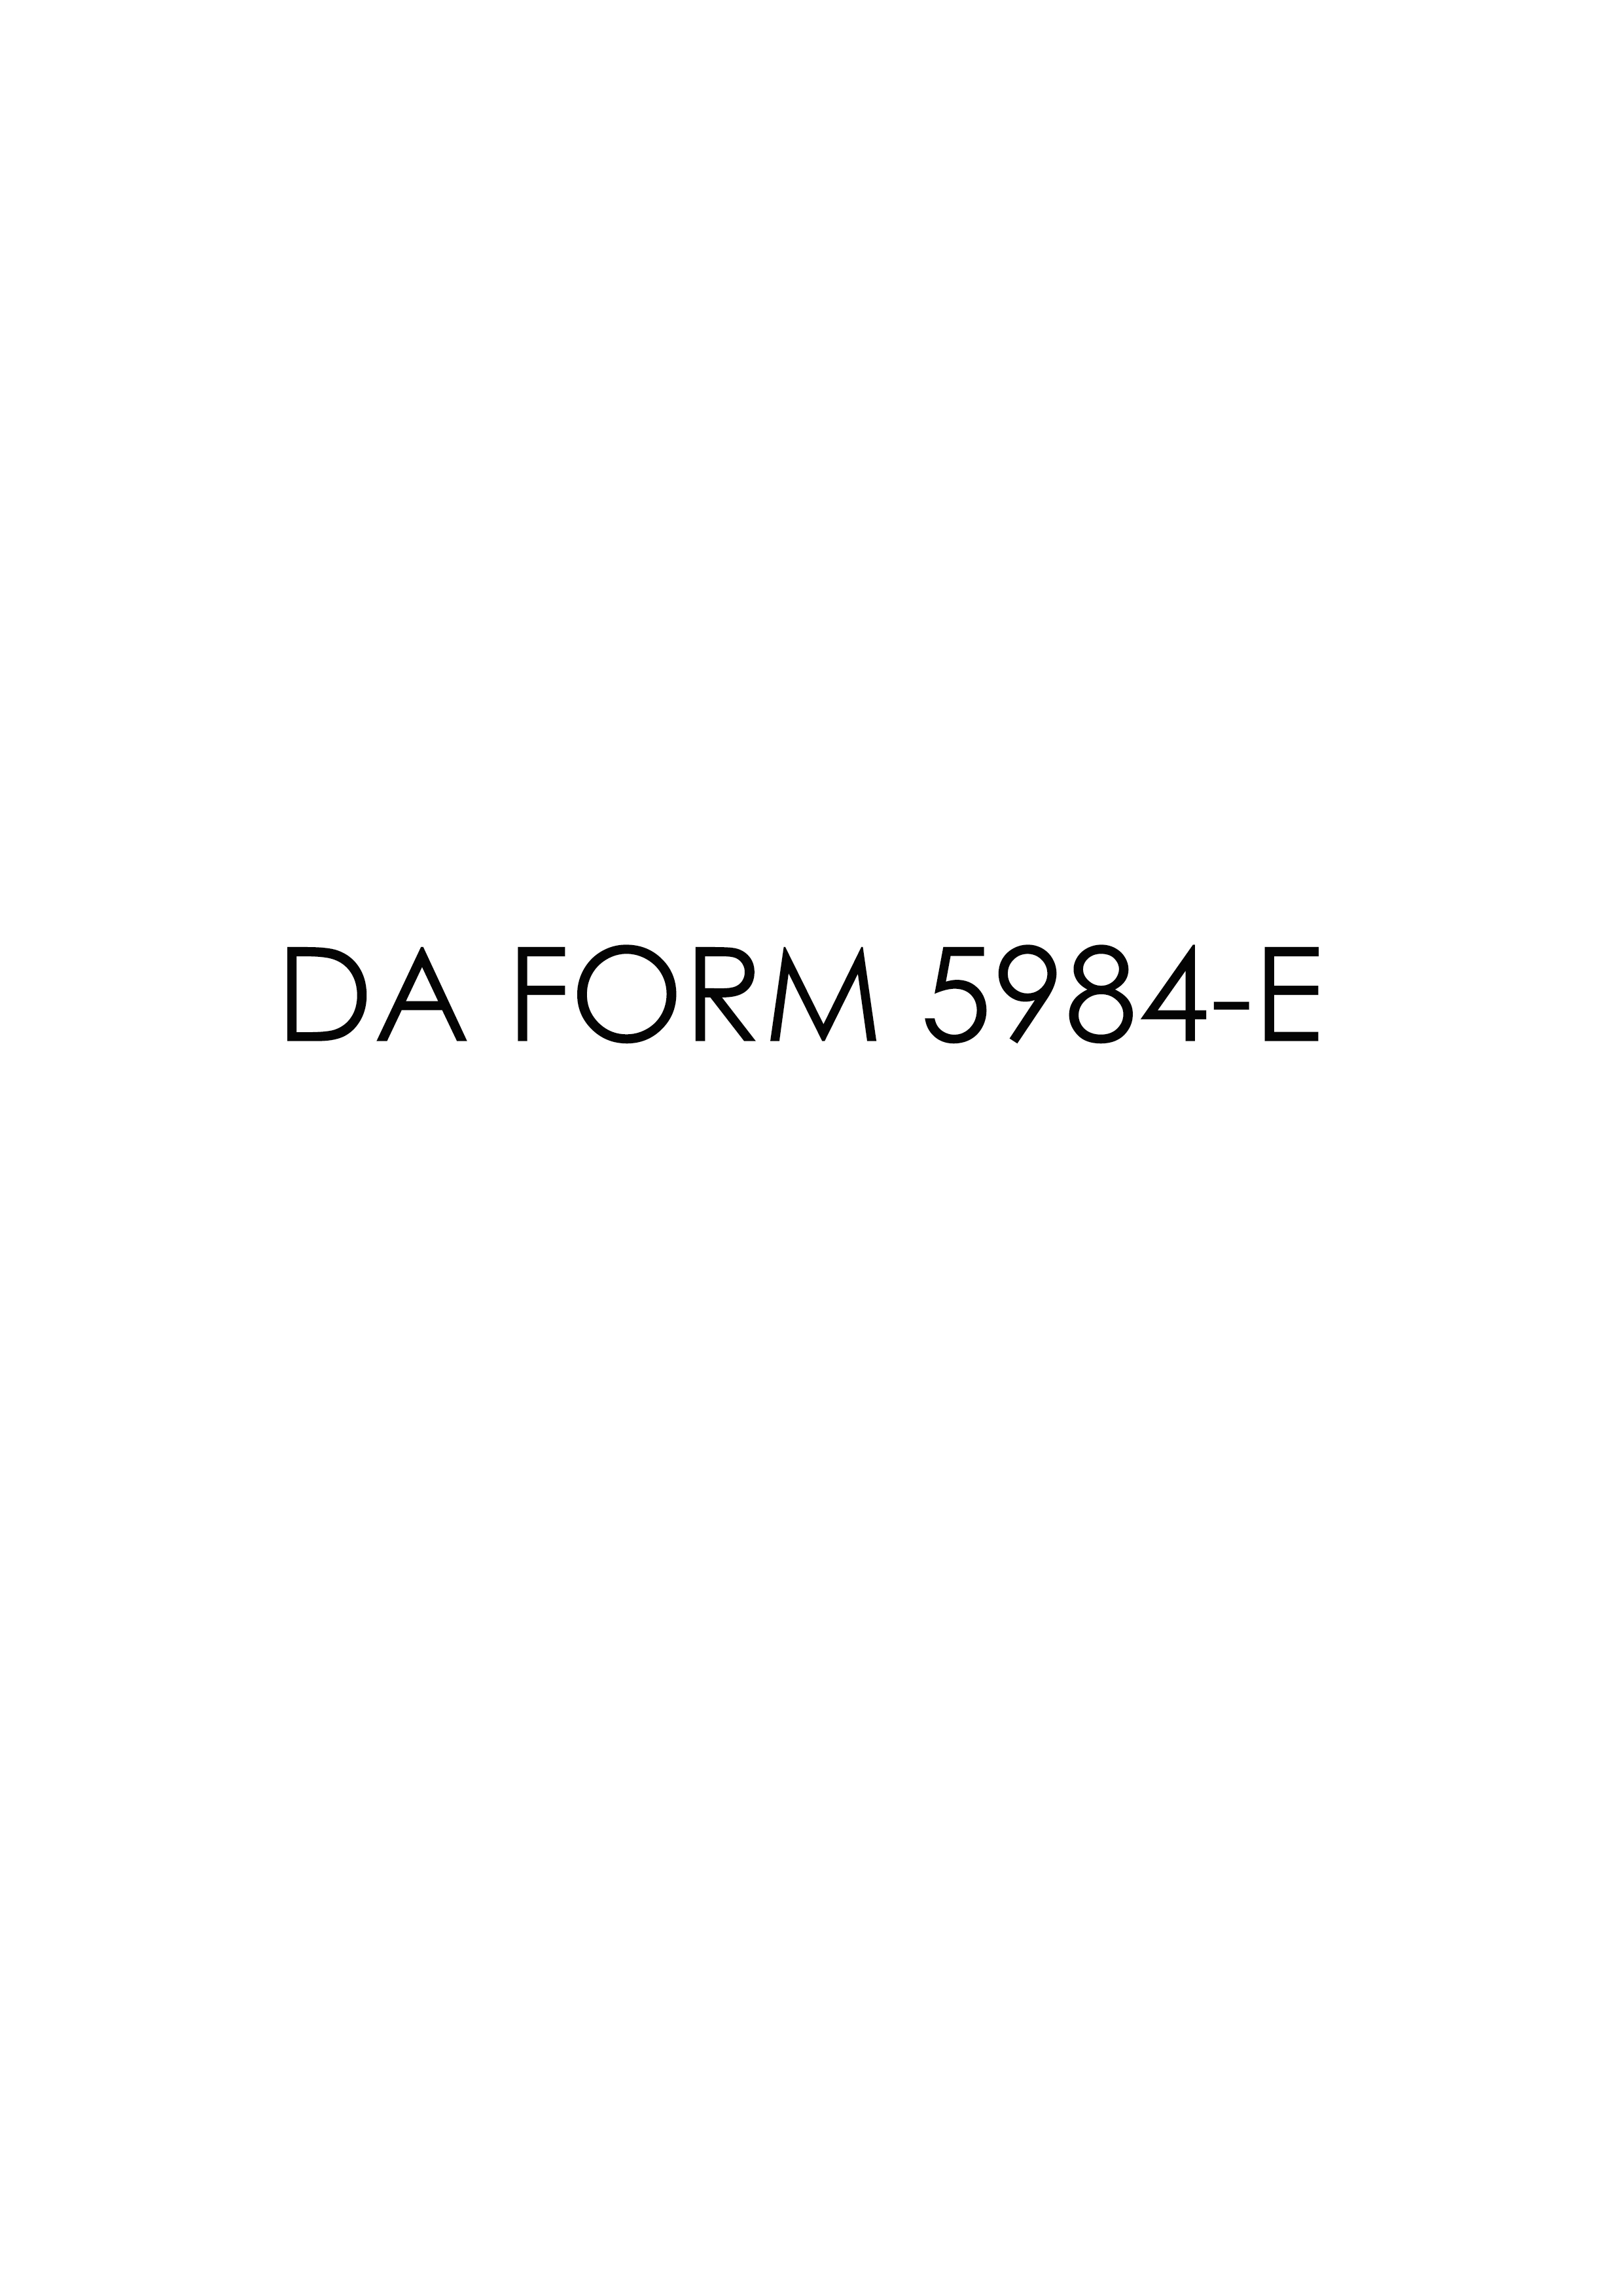 da Form 5984-E fillable